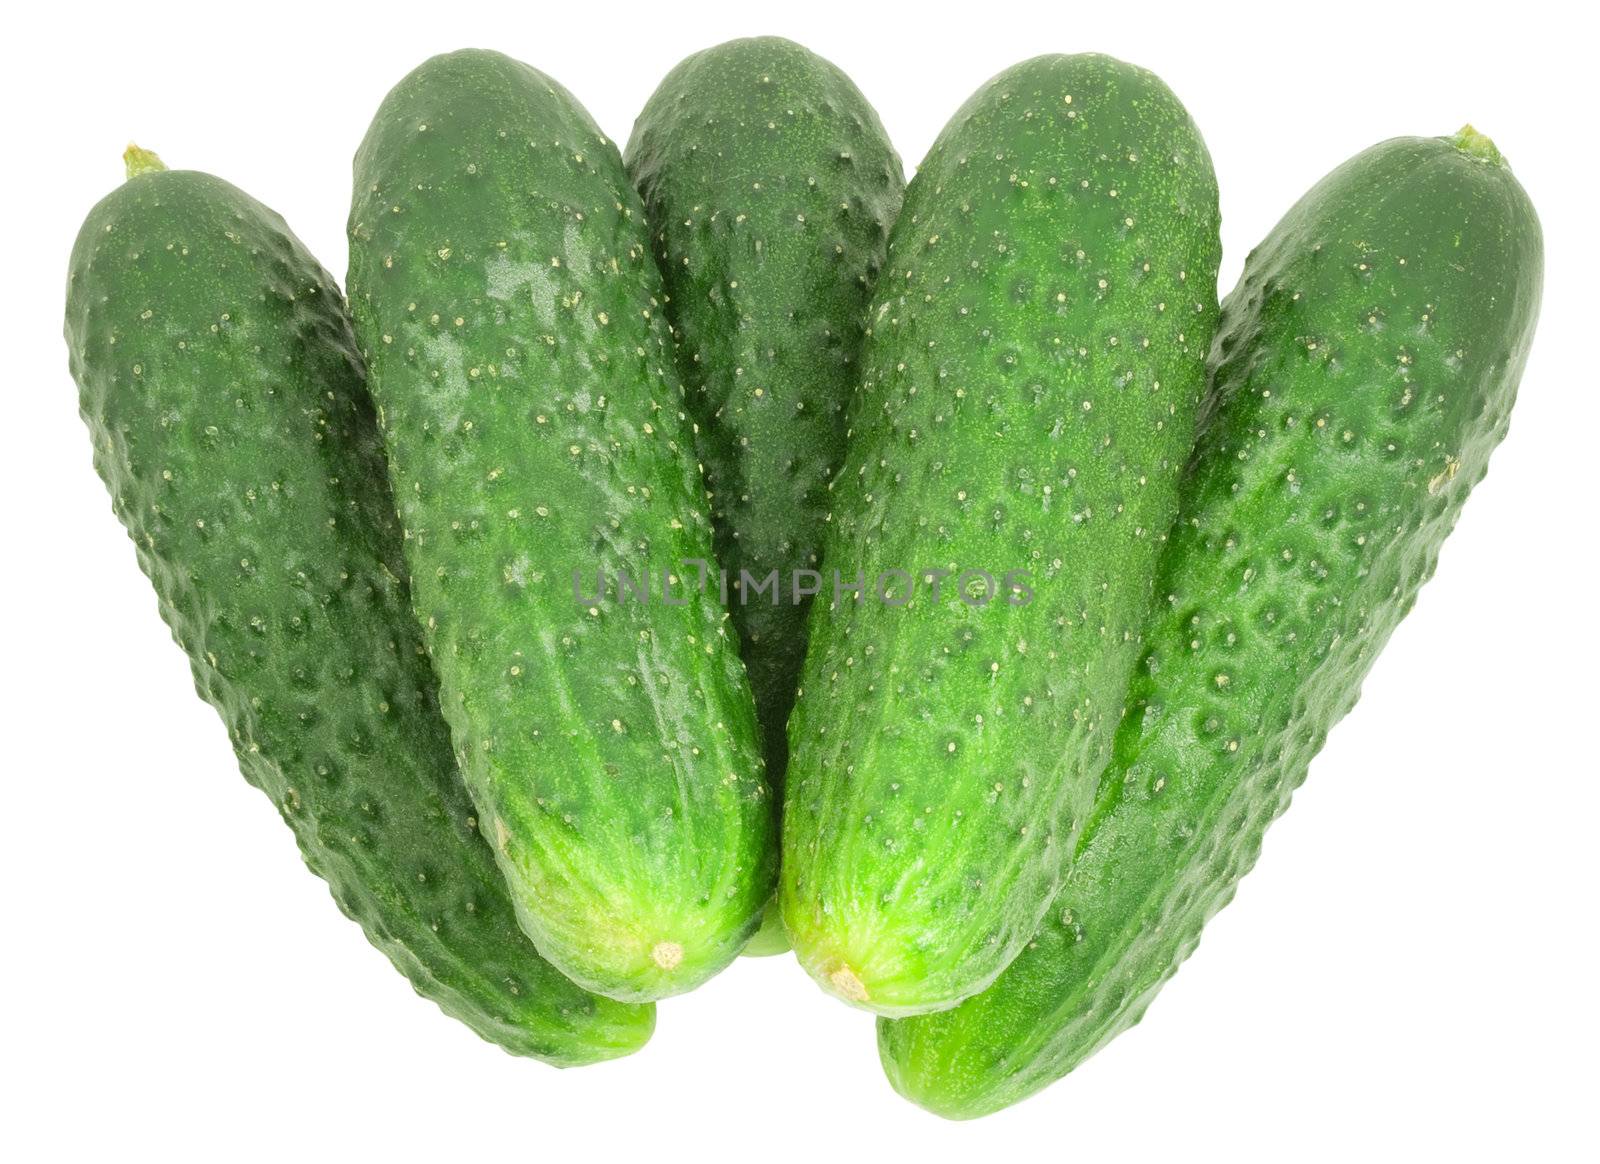 cucumbers by Zloneg